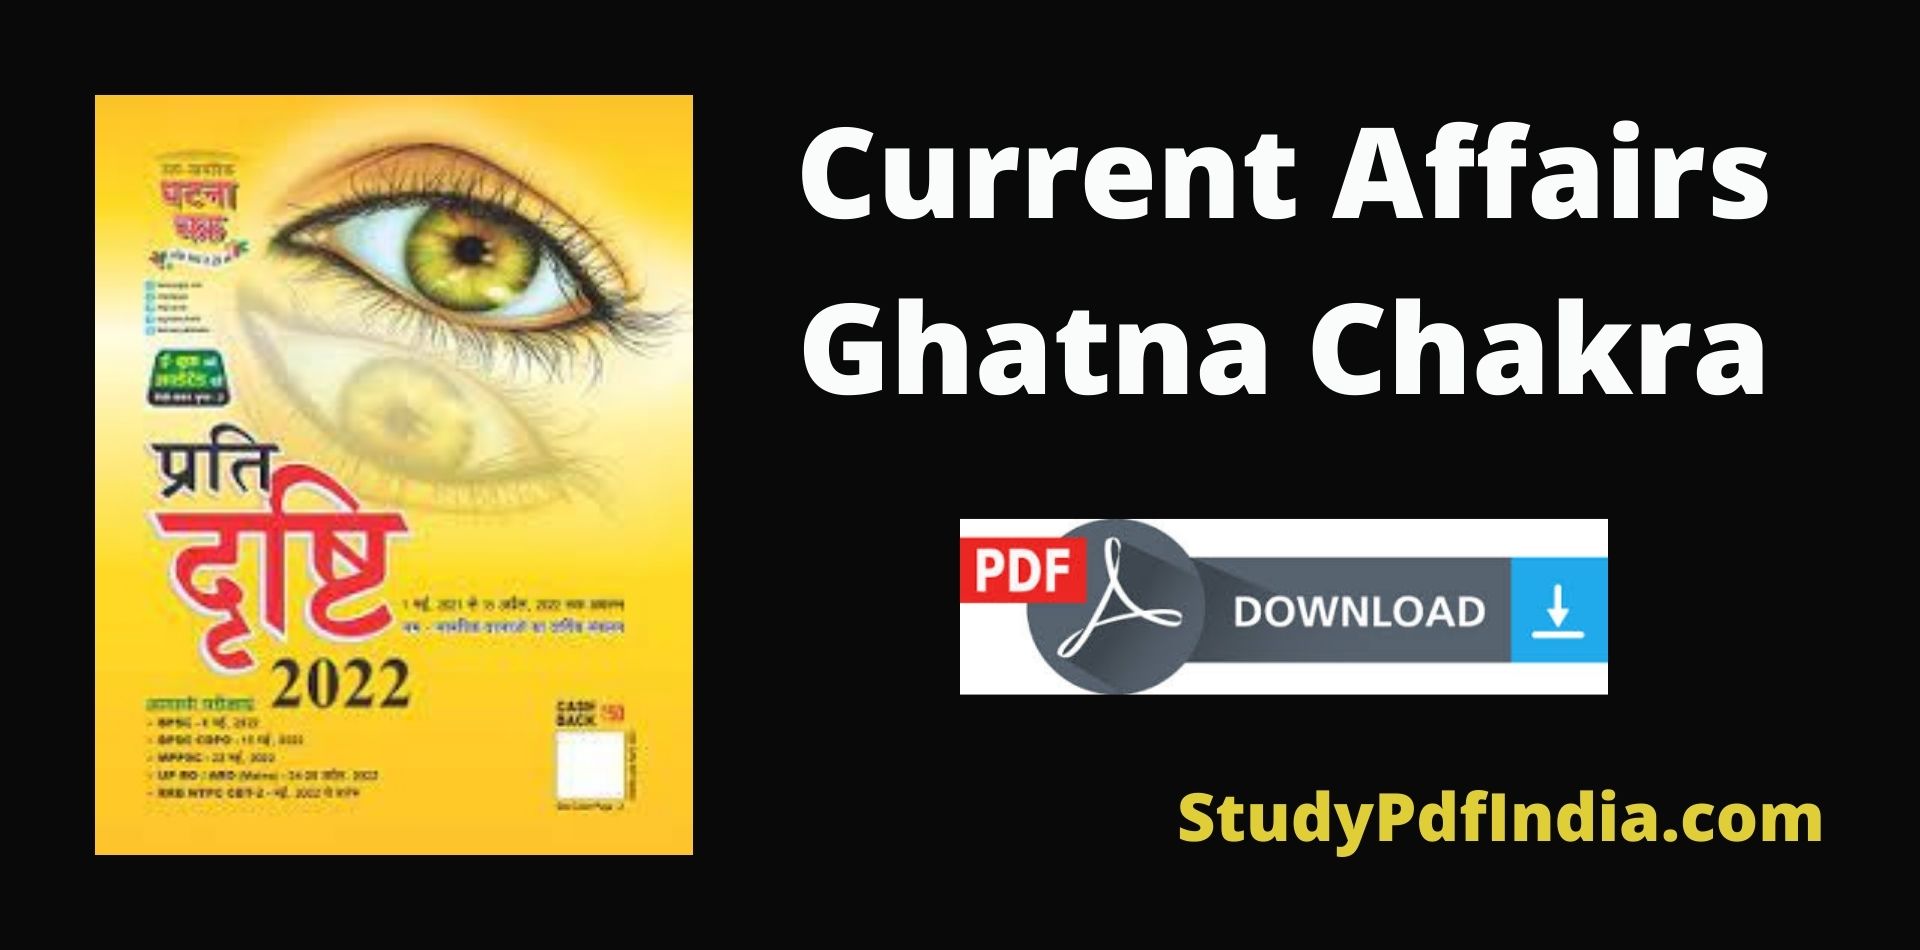 Current Affairs Ghatna Chakra PDF in Hindi Download